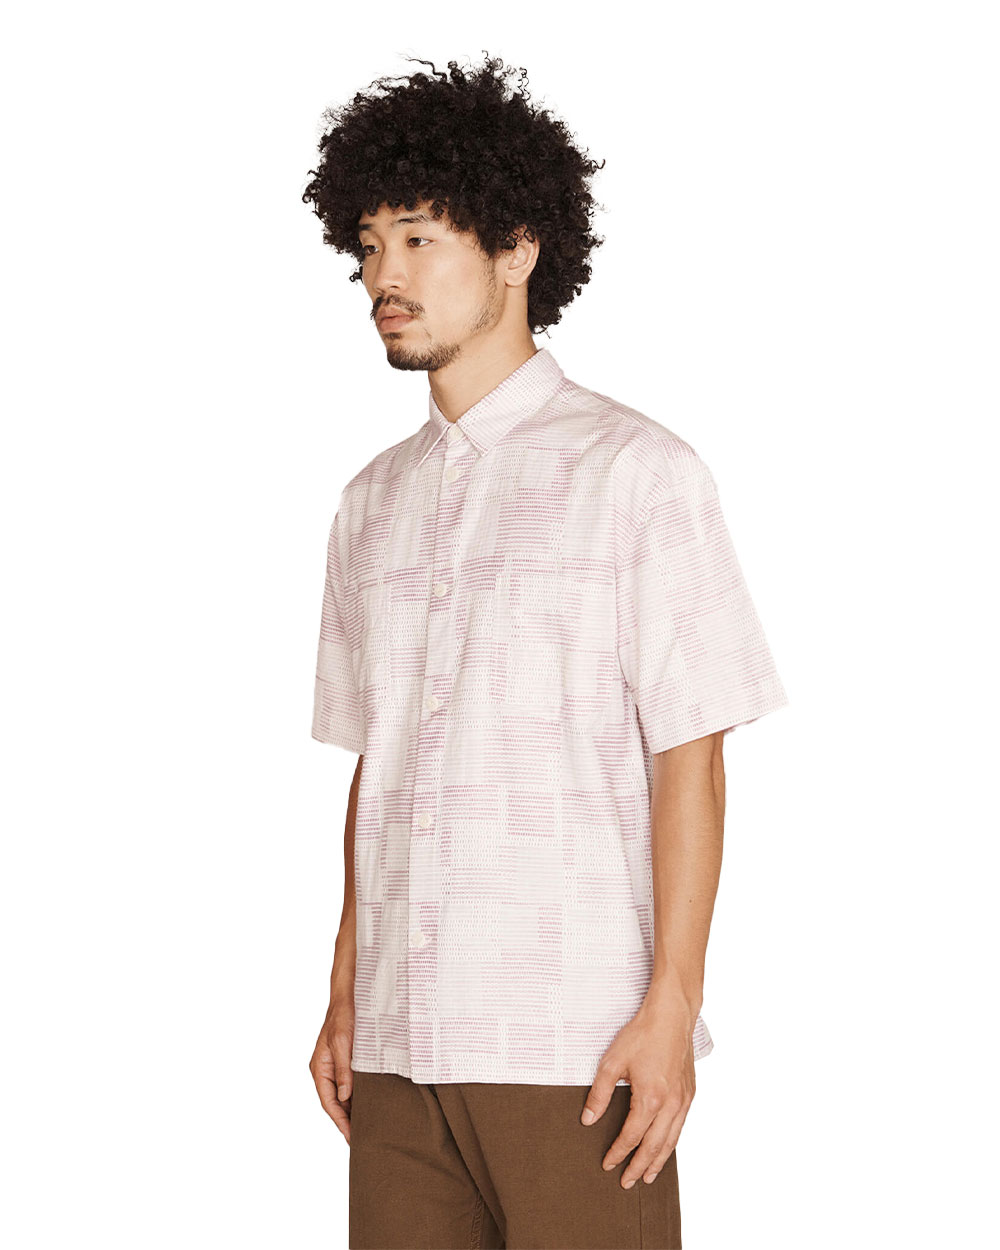 Mitchum Shirt (Ecru-Lilac)